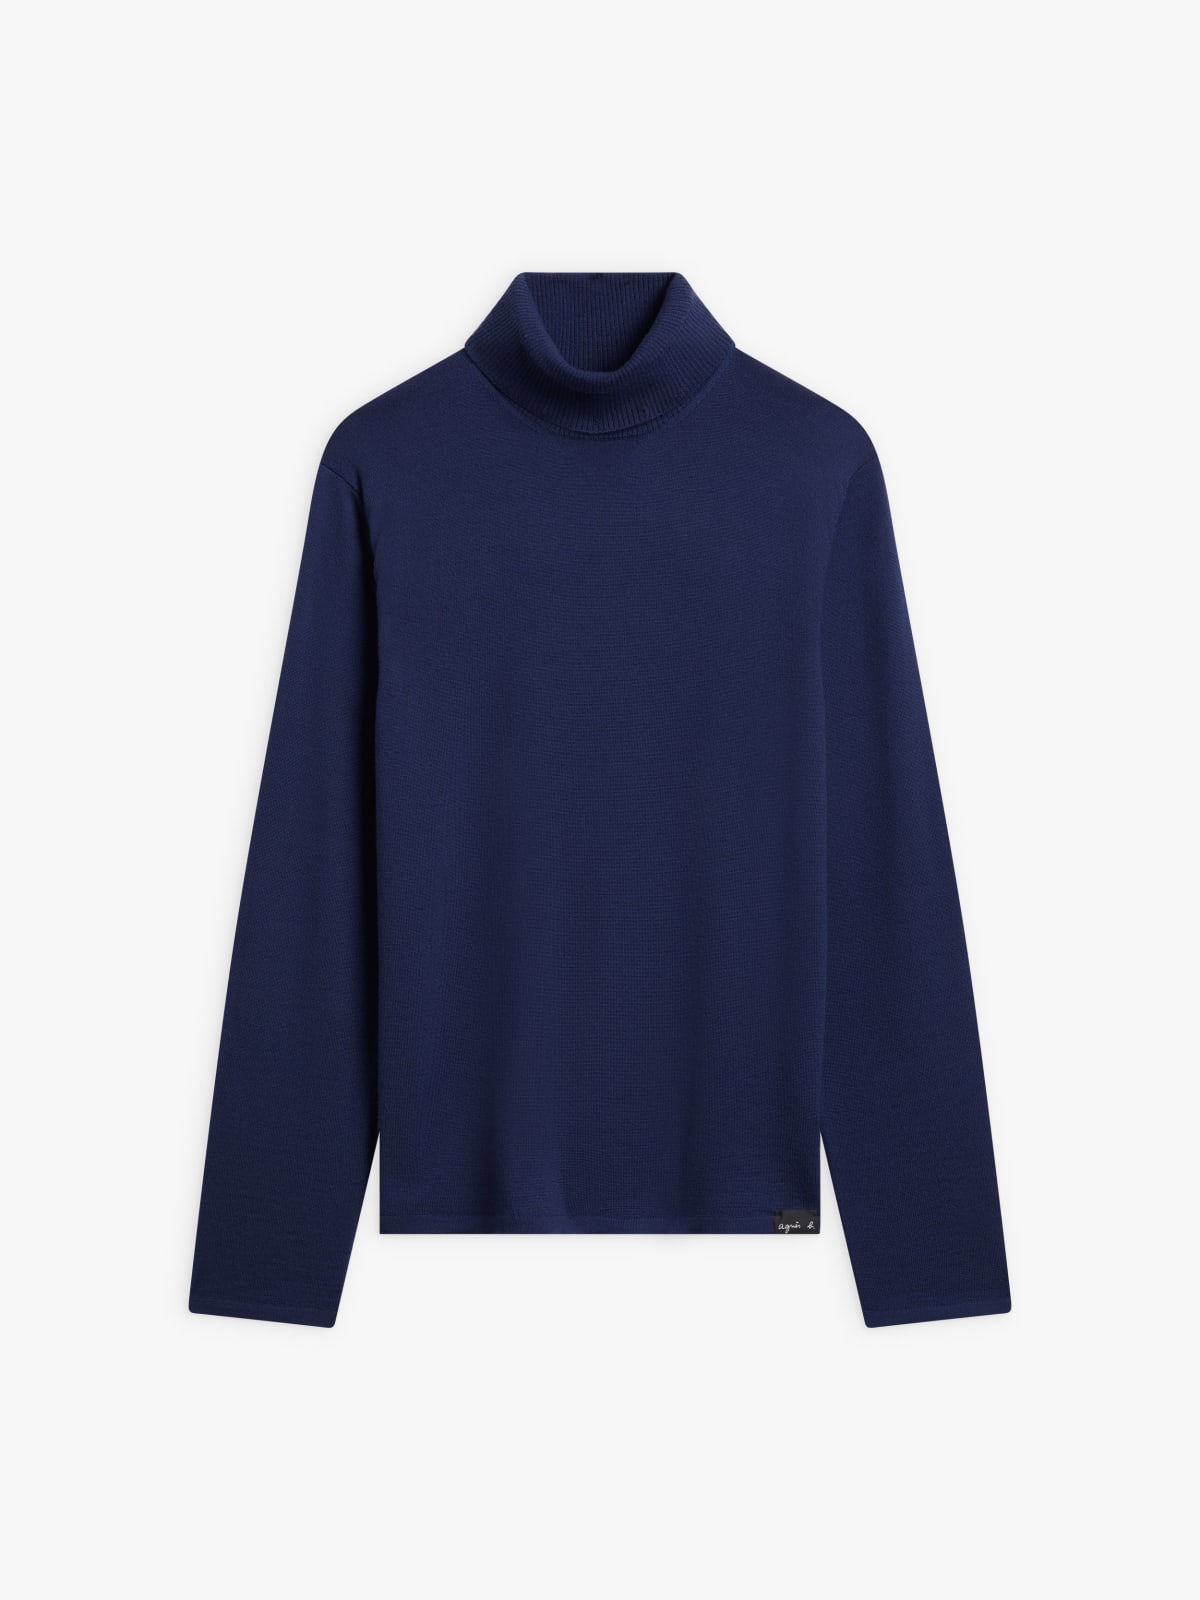 blue merino wool New Light jumper